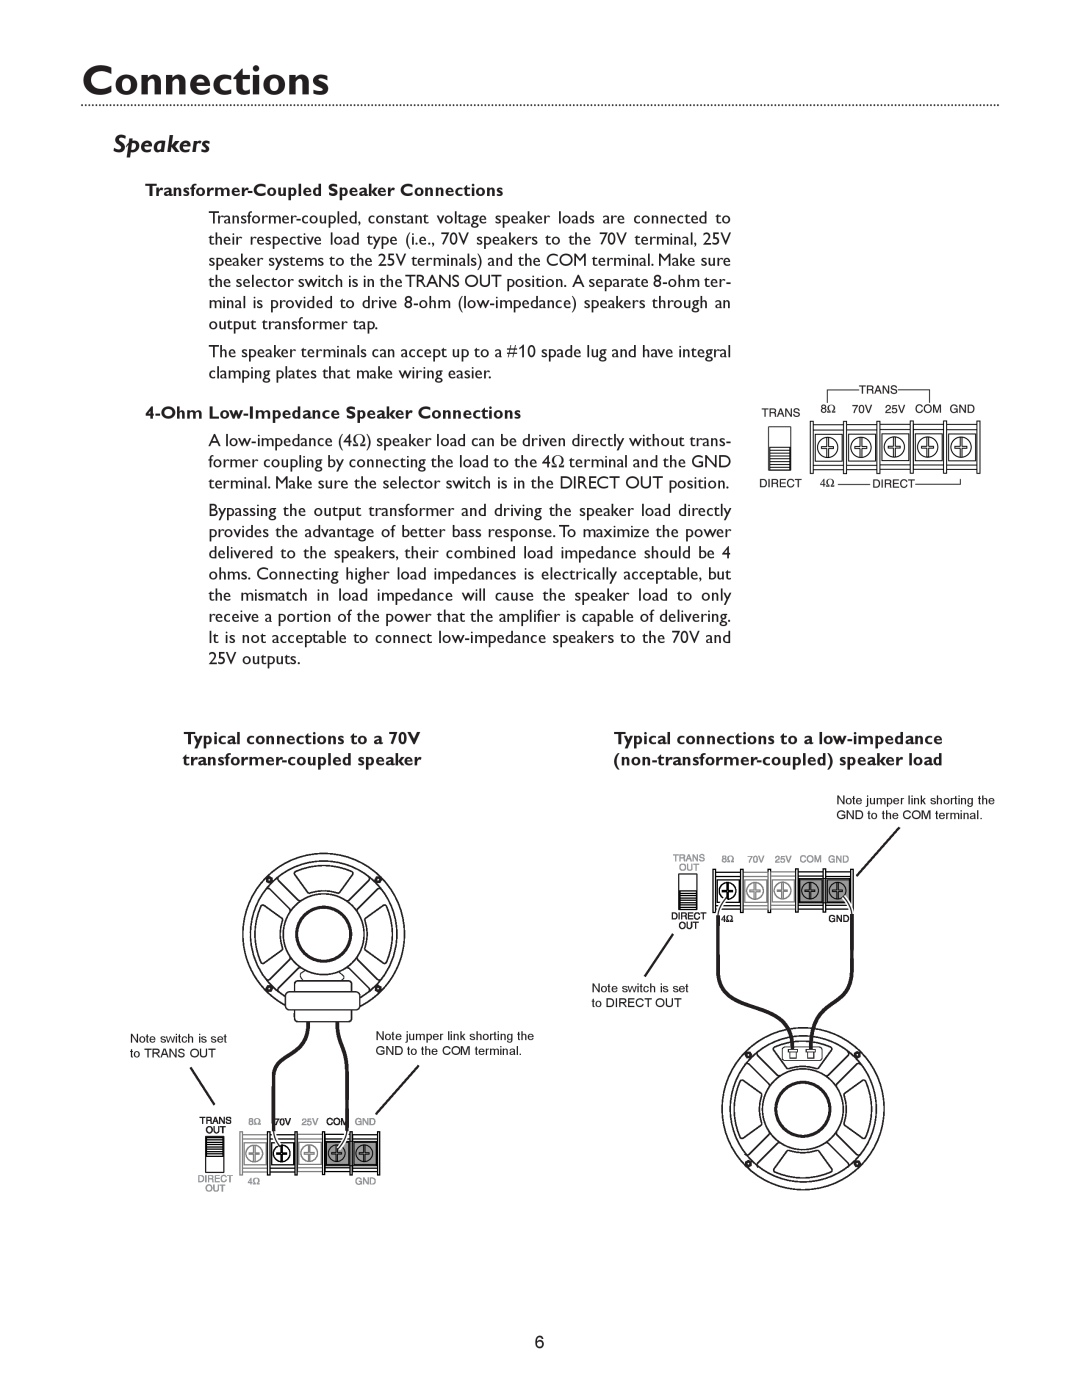 Bogen WV100, & WV250 Speakers, Transformer-CoupledSpeaker Connections, Ohm Low-ImpedanceSpeaker Connections 